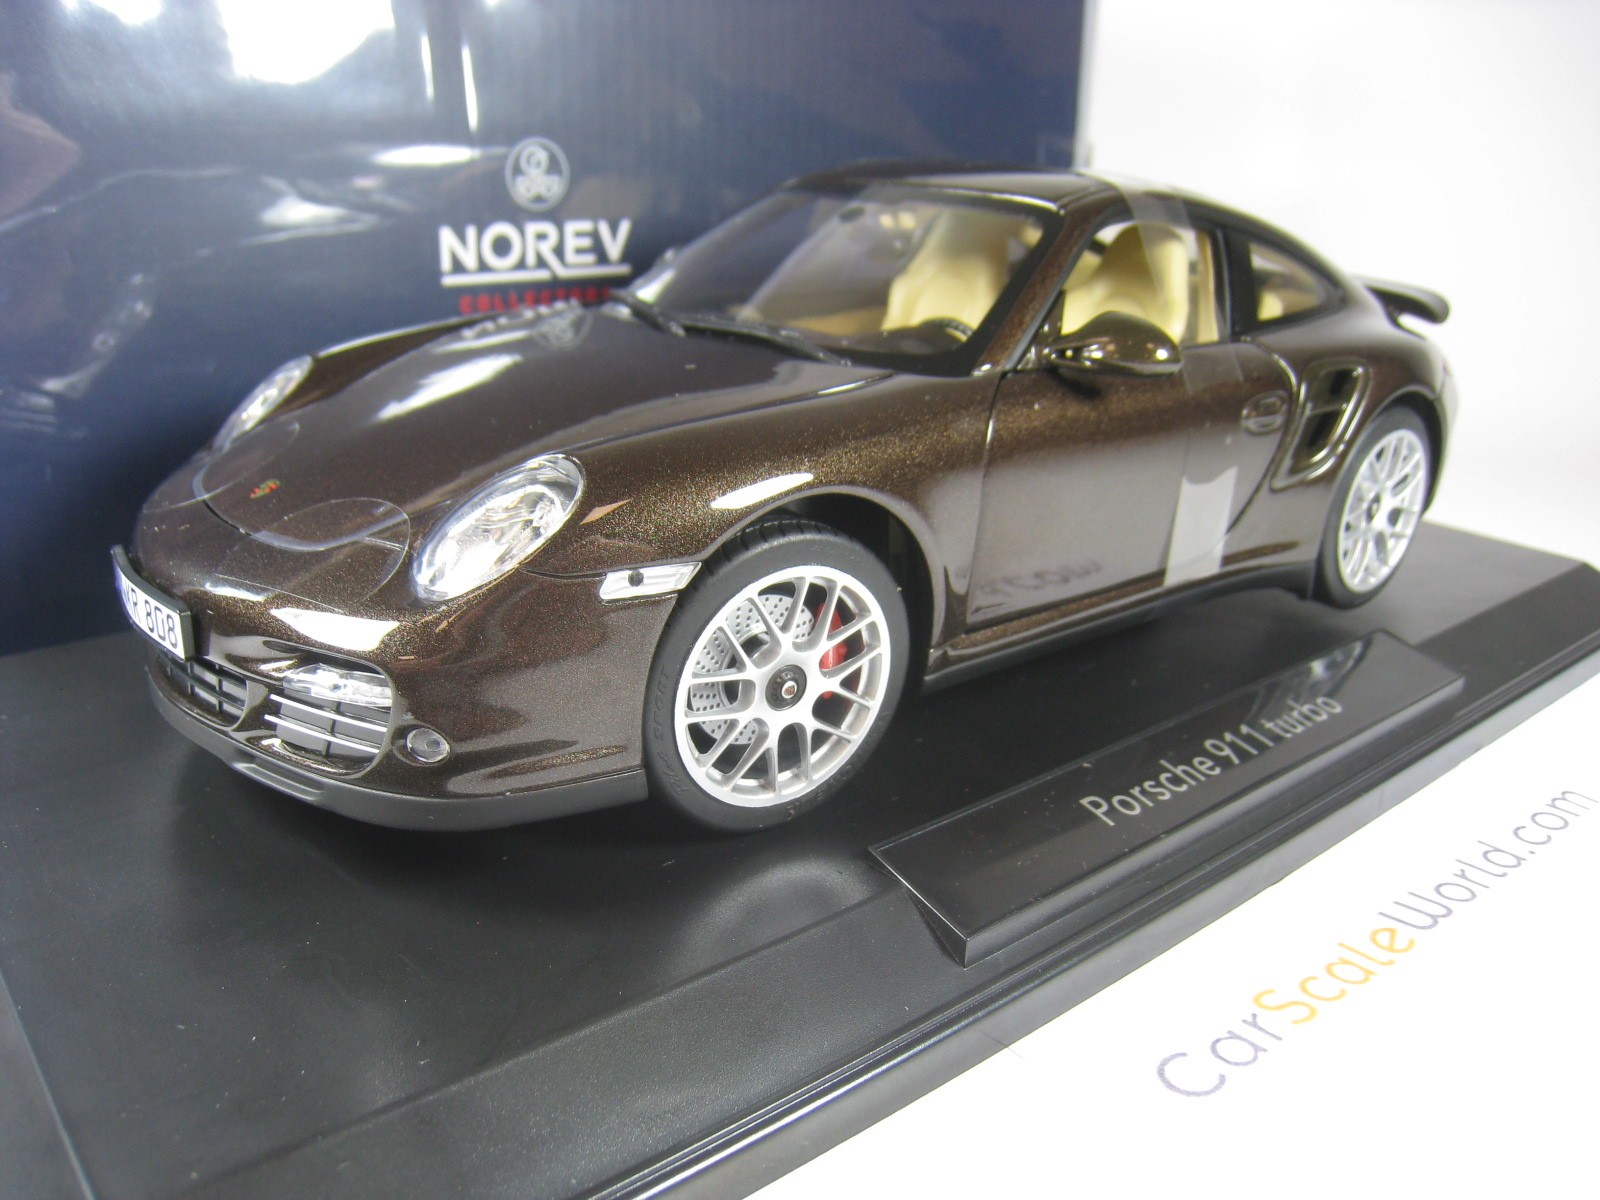 Norev 1/18 Porsche 911 Turbo 2010 Metal Diecast Modelo Coche Juguetes Regalos Collection